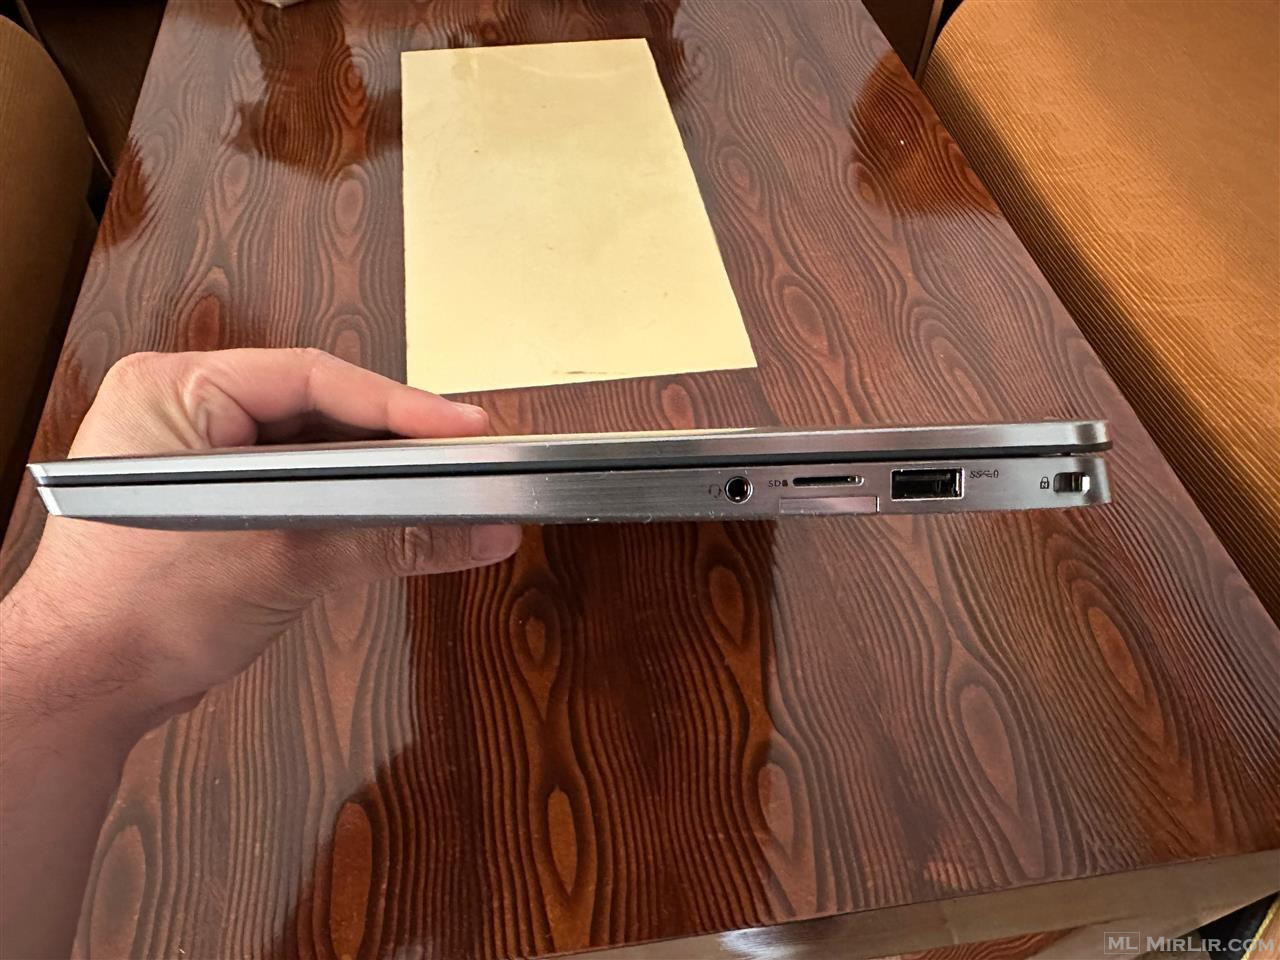 Laptop Dell Latitude 7400